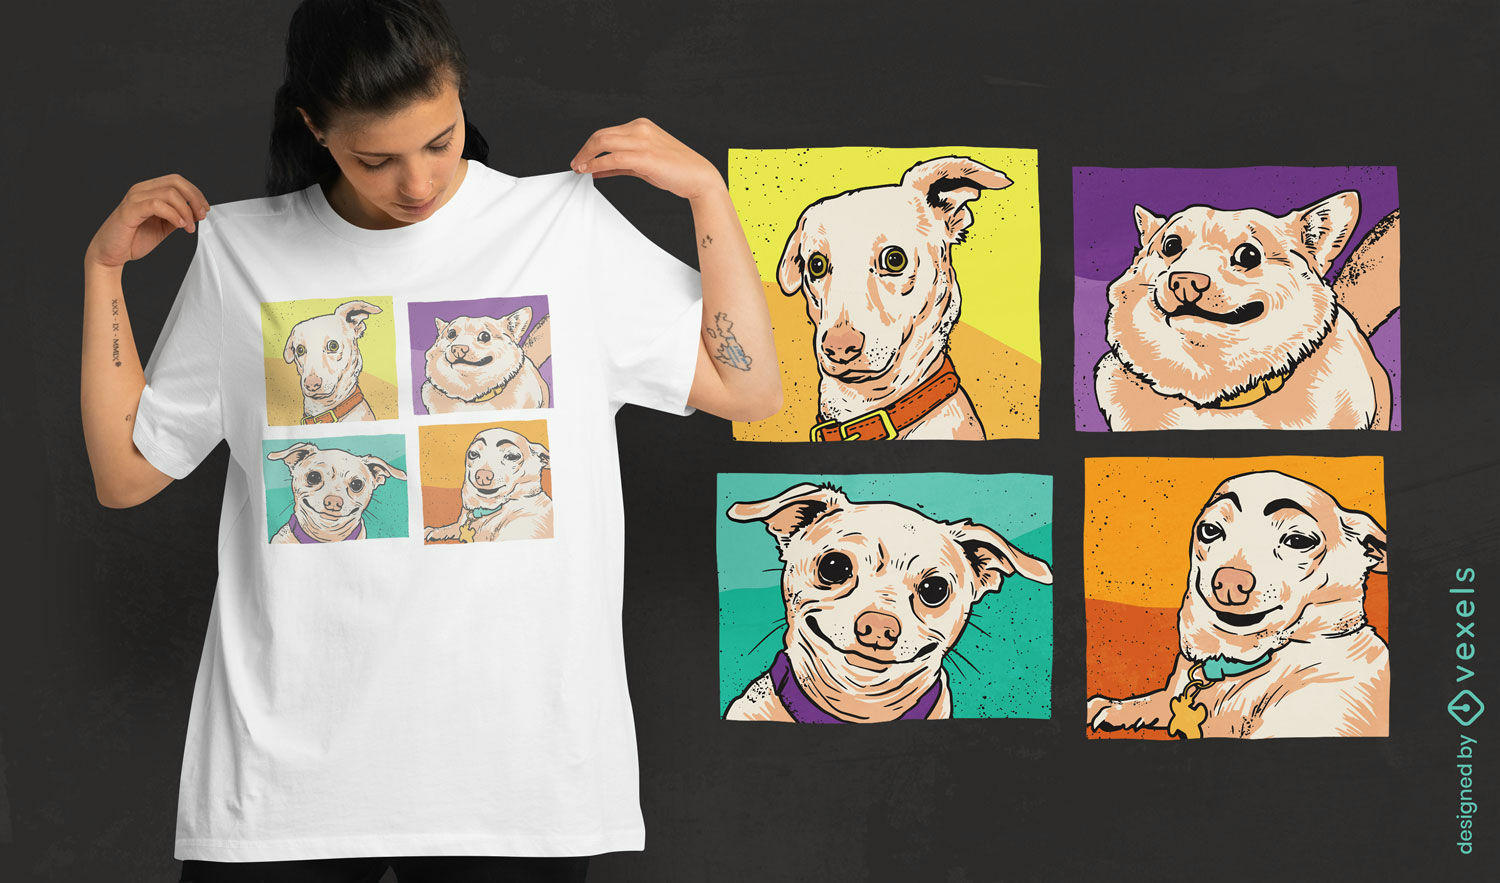 Dog memes collage t-shirt design